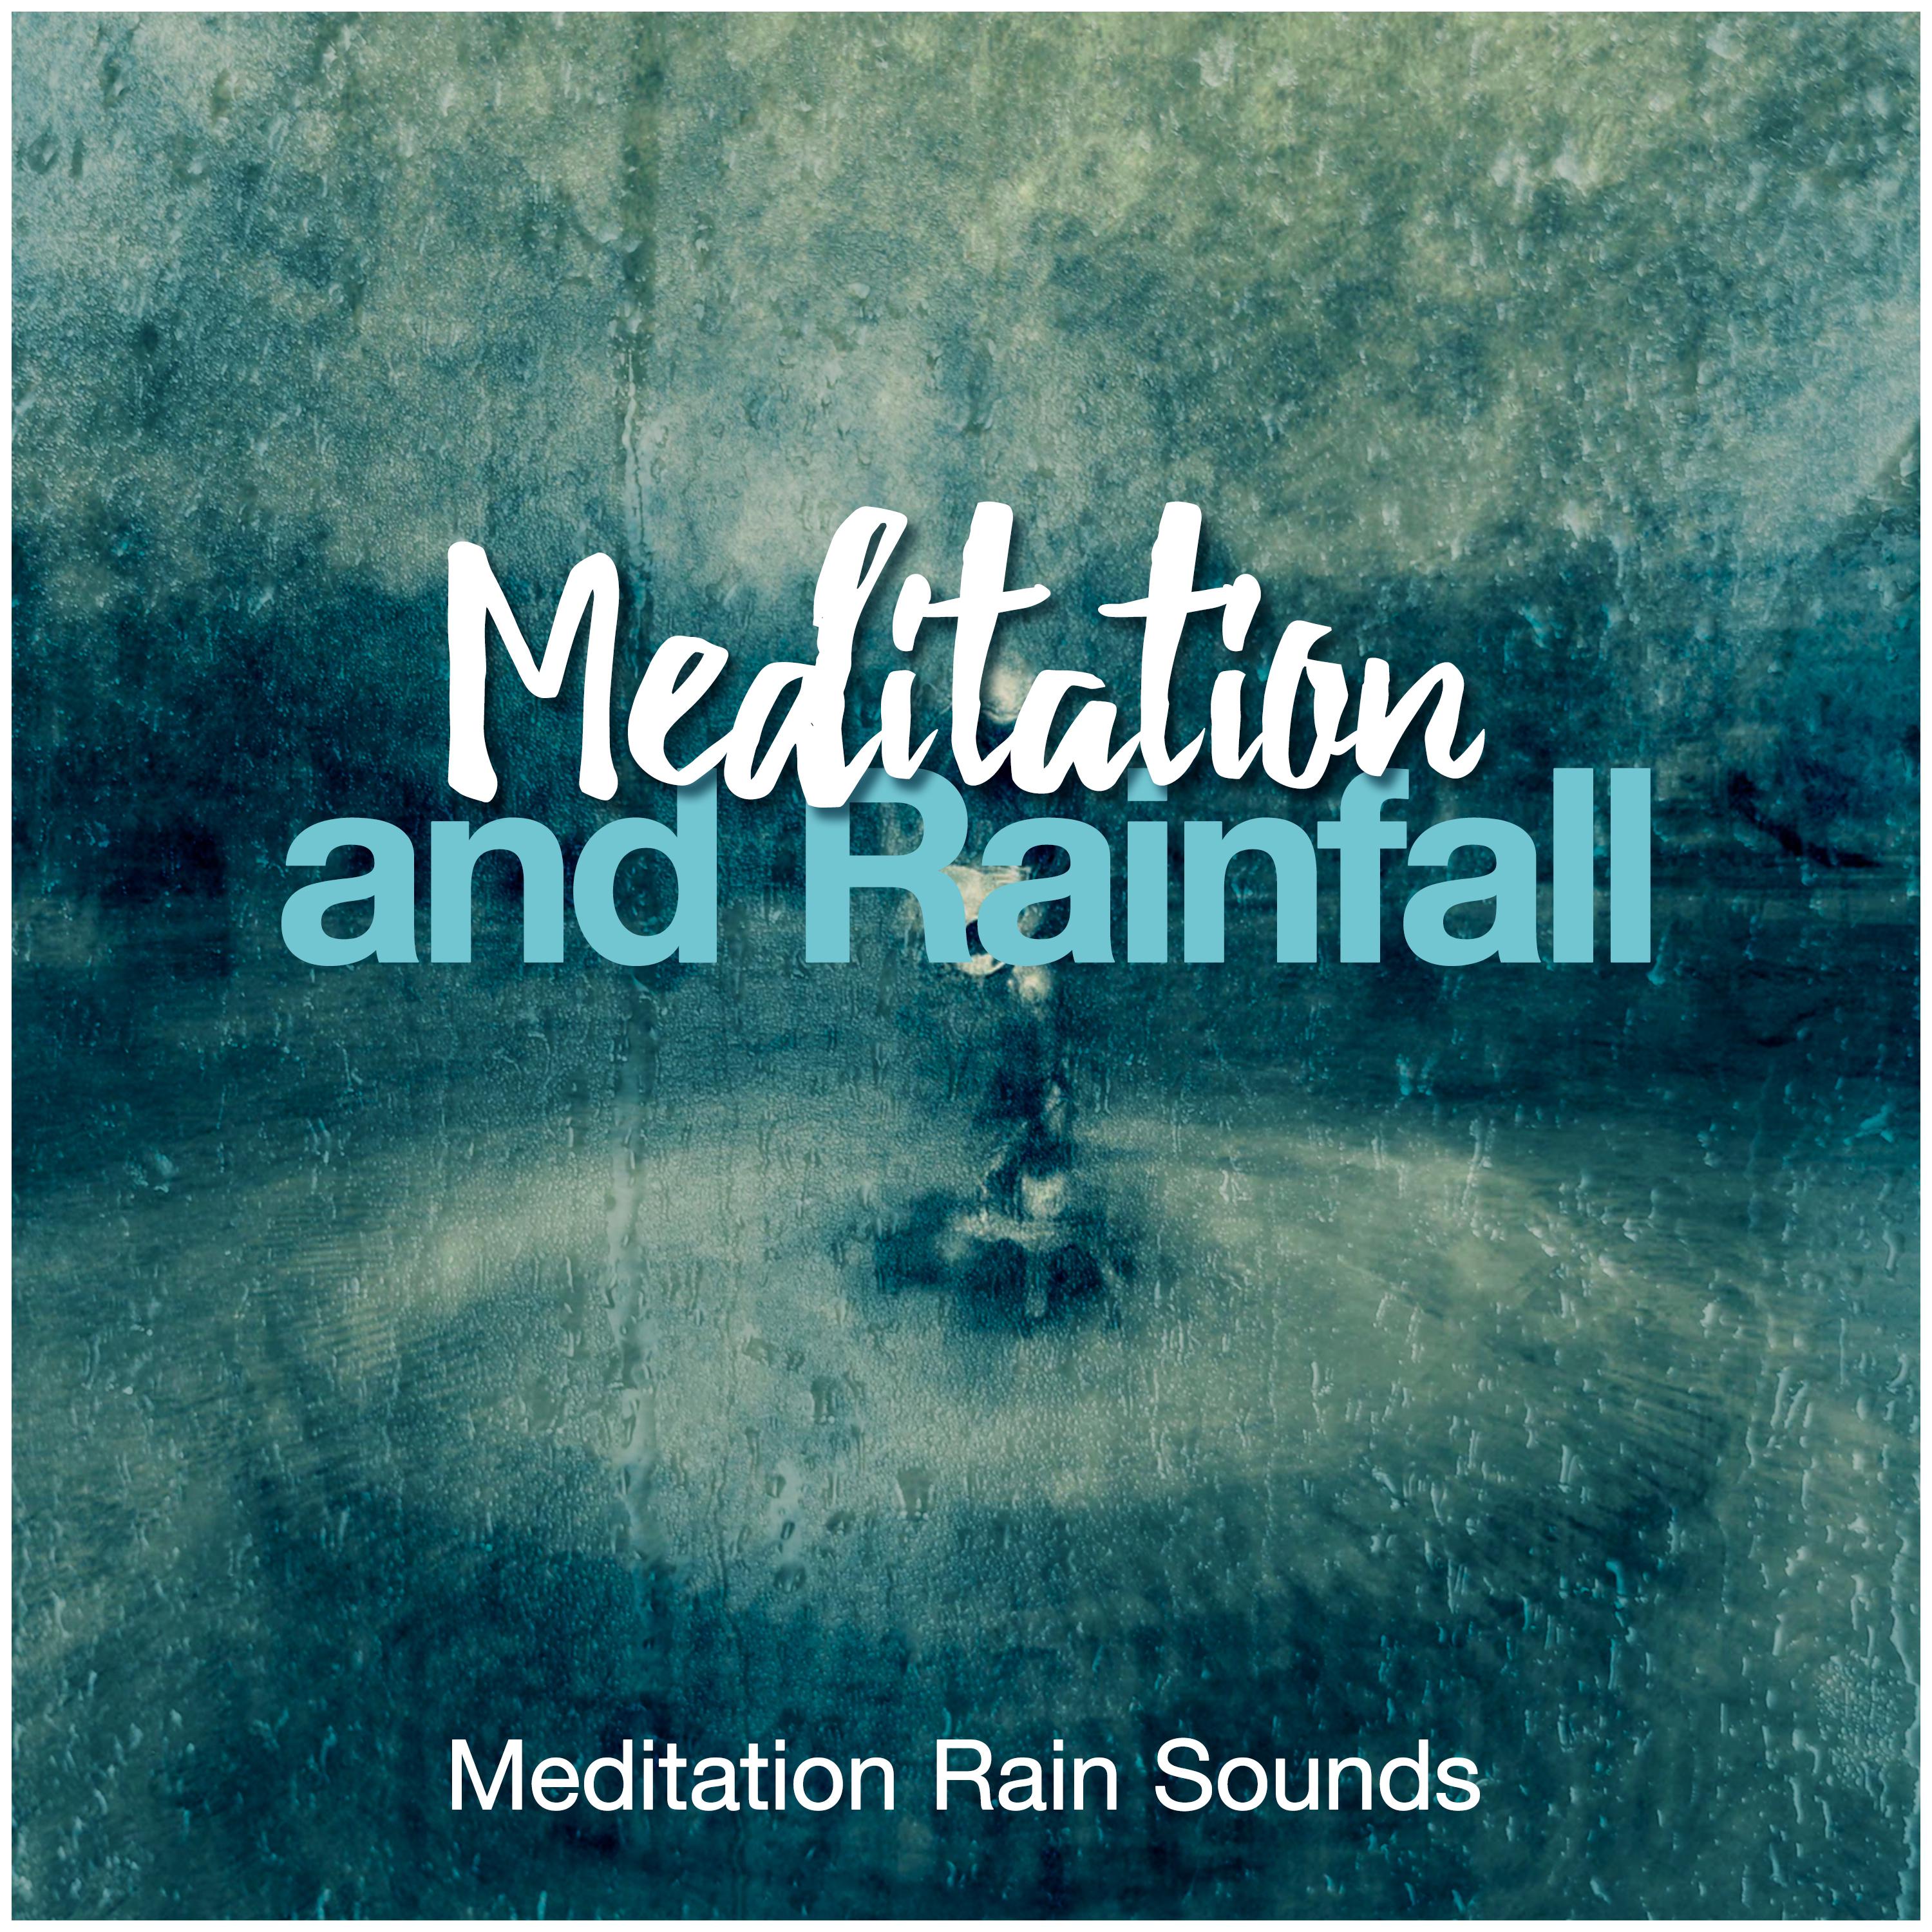 Meditation and Rainfall